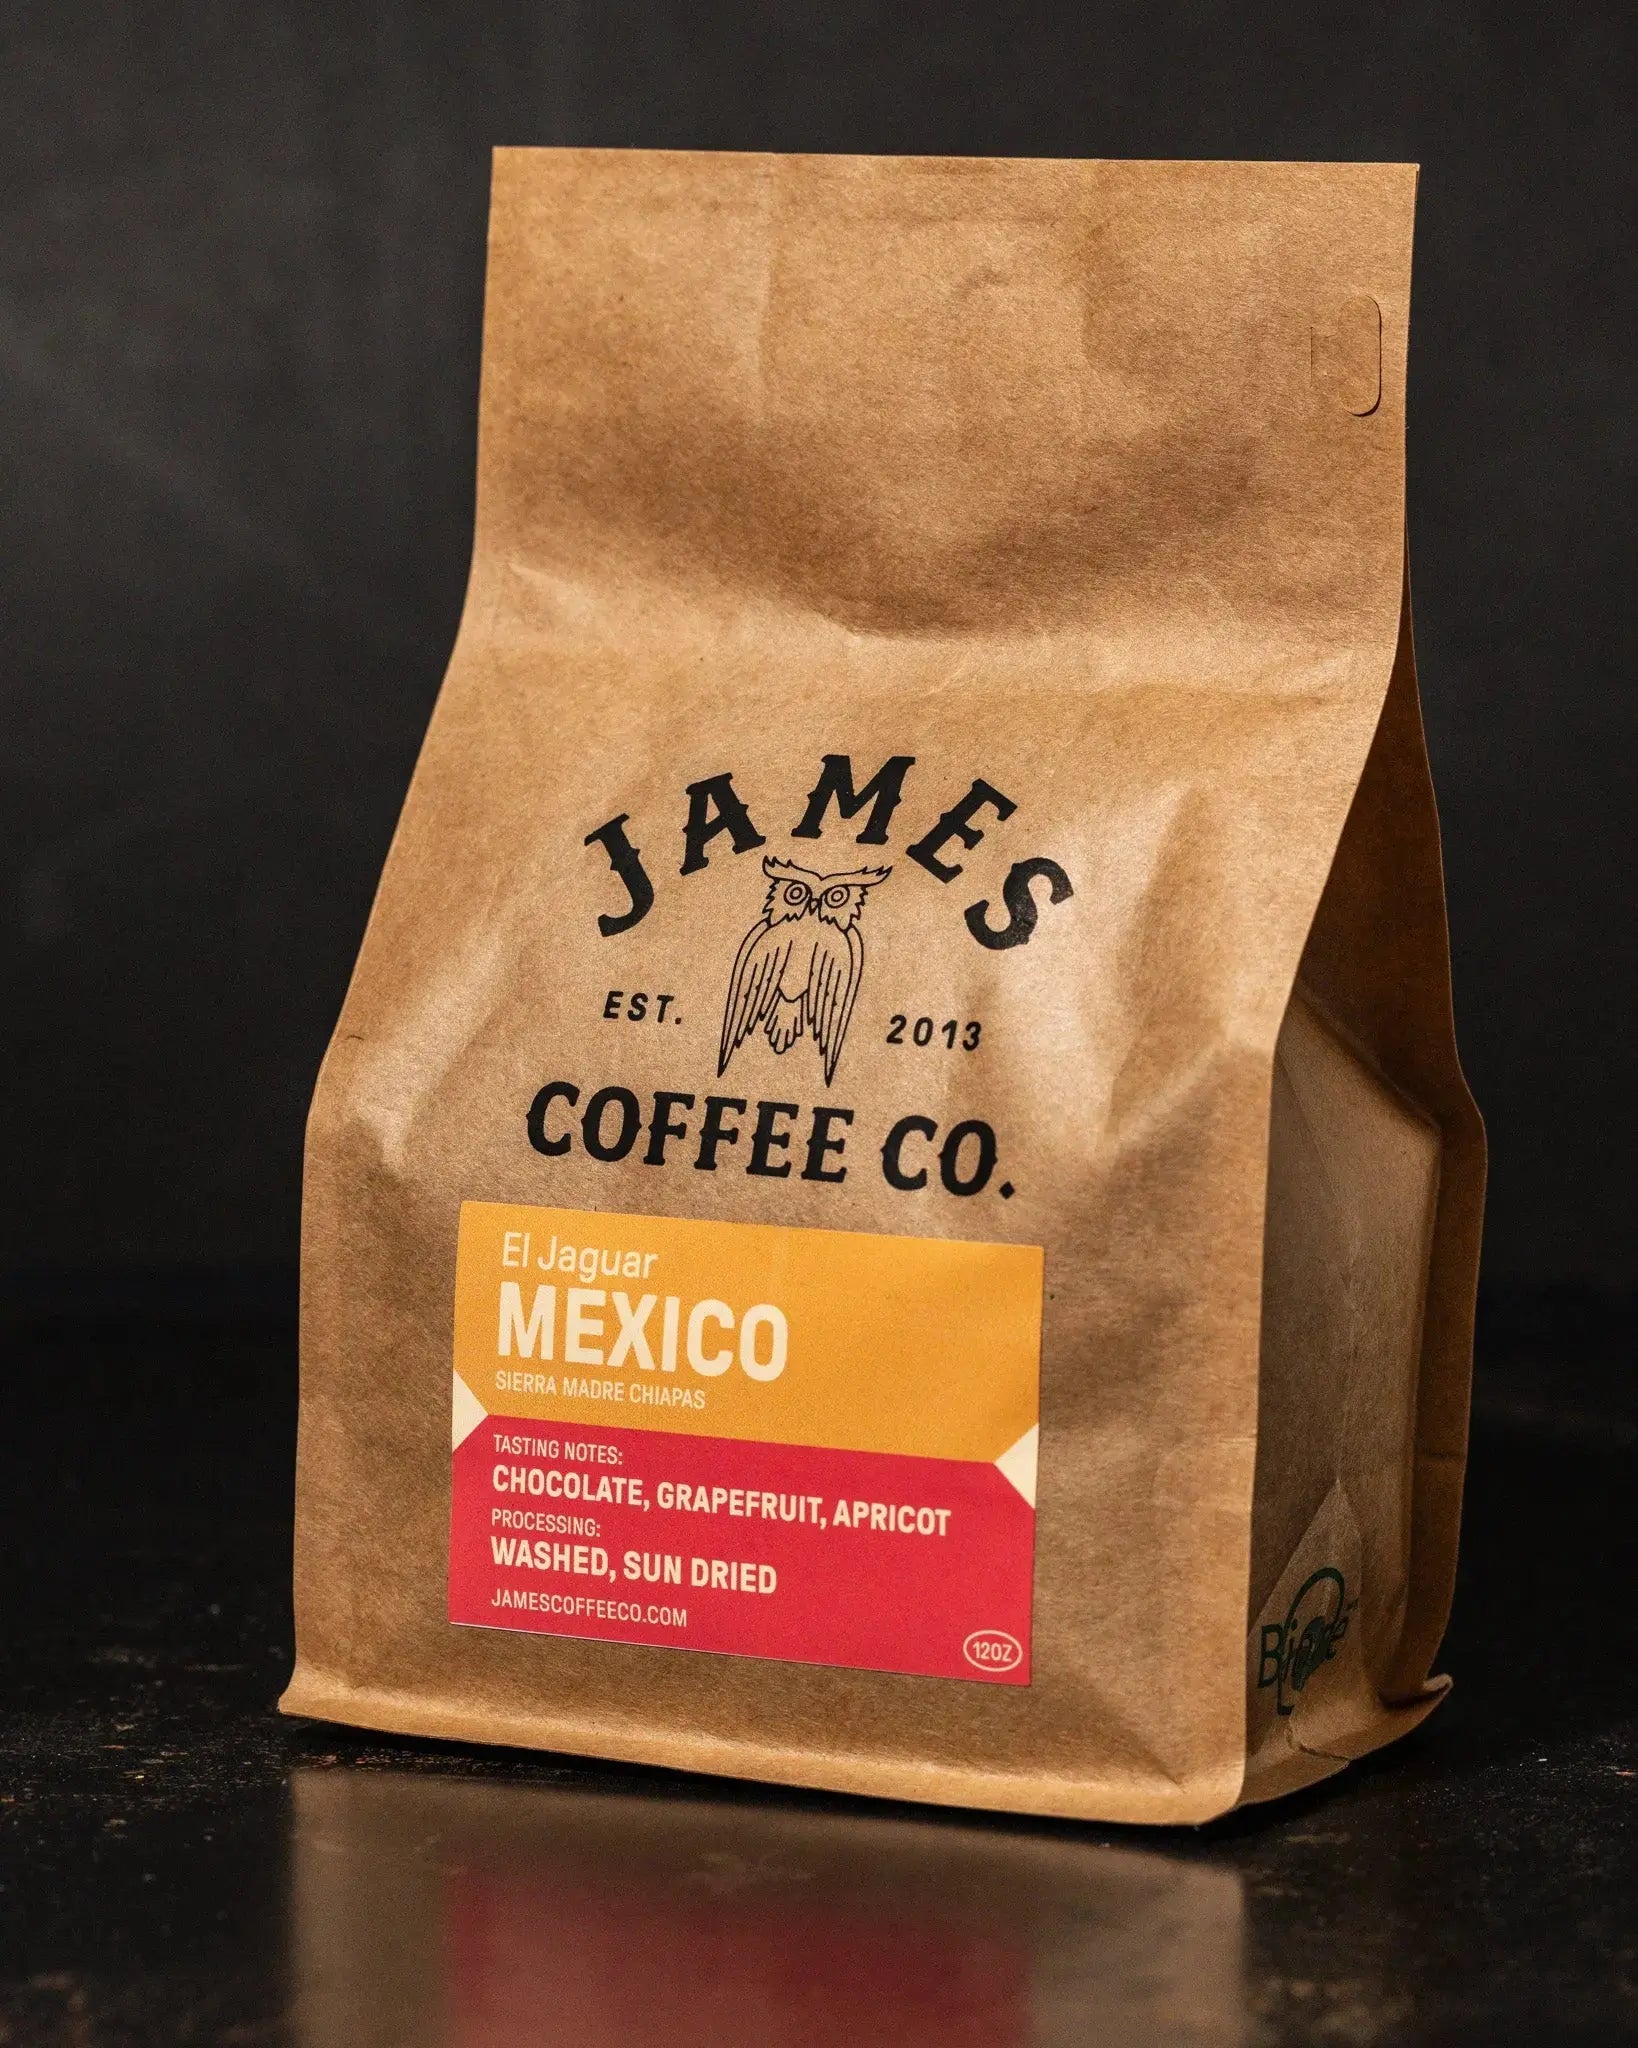 Mexico "El Jaguar" - 5 lbs James Coffee Co